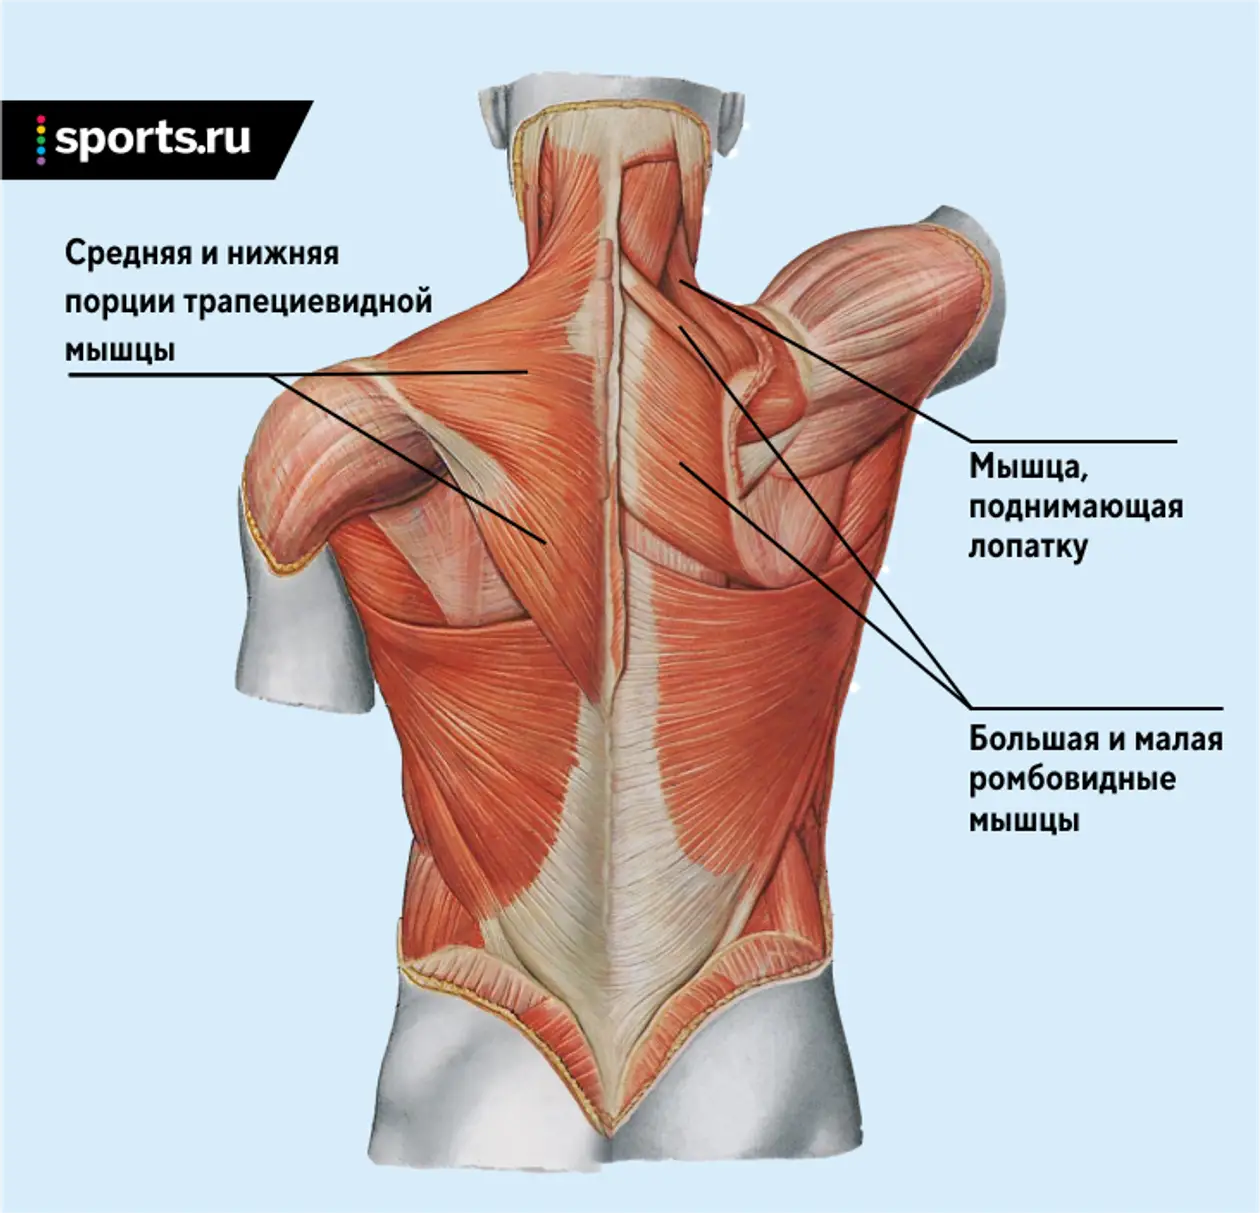 Трапециевидная функция. Трапециевидная мышца спины функции. Трапециевидная мышца спины анатомия. Трапециевидные мышцы верхняя средняя нижняя. Трапециевидная мышца (m. Trapezius).